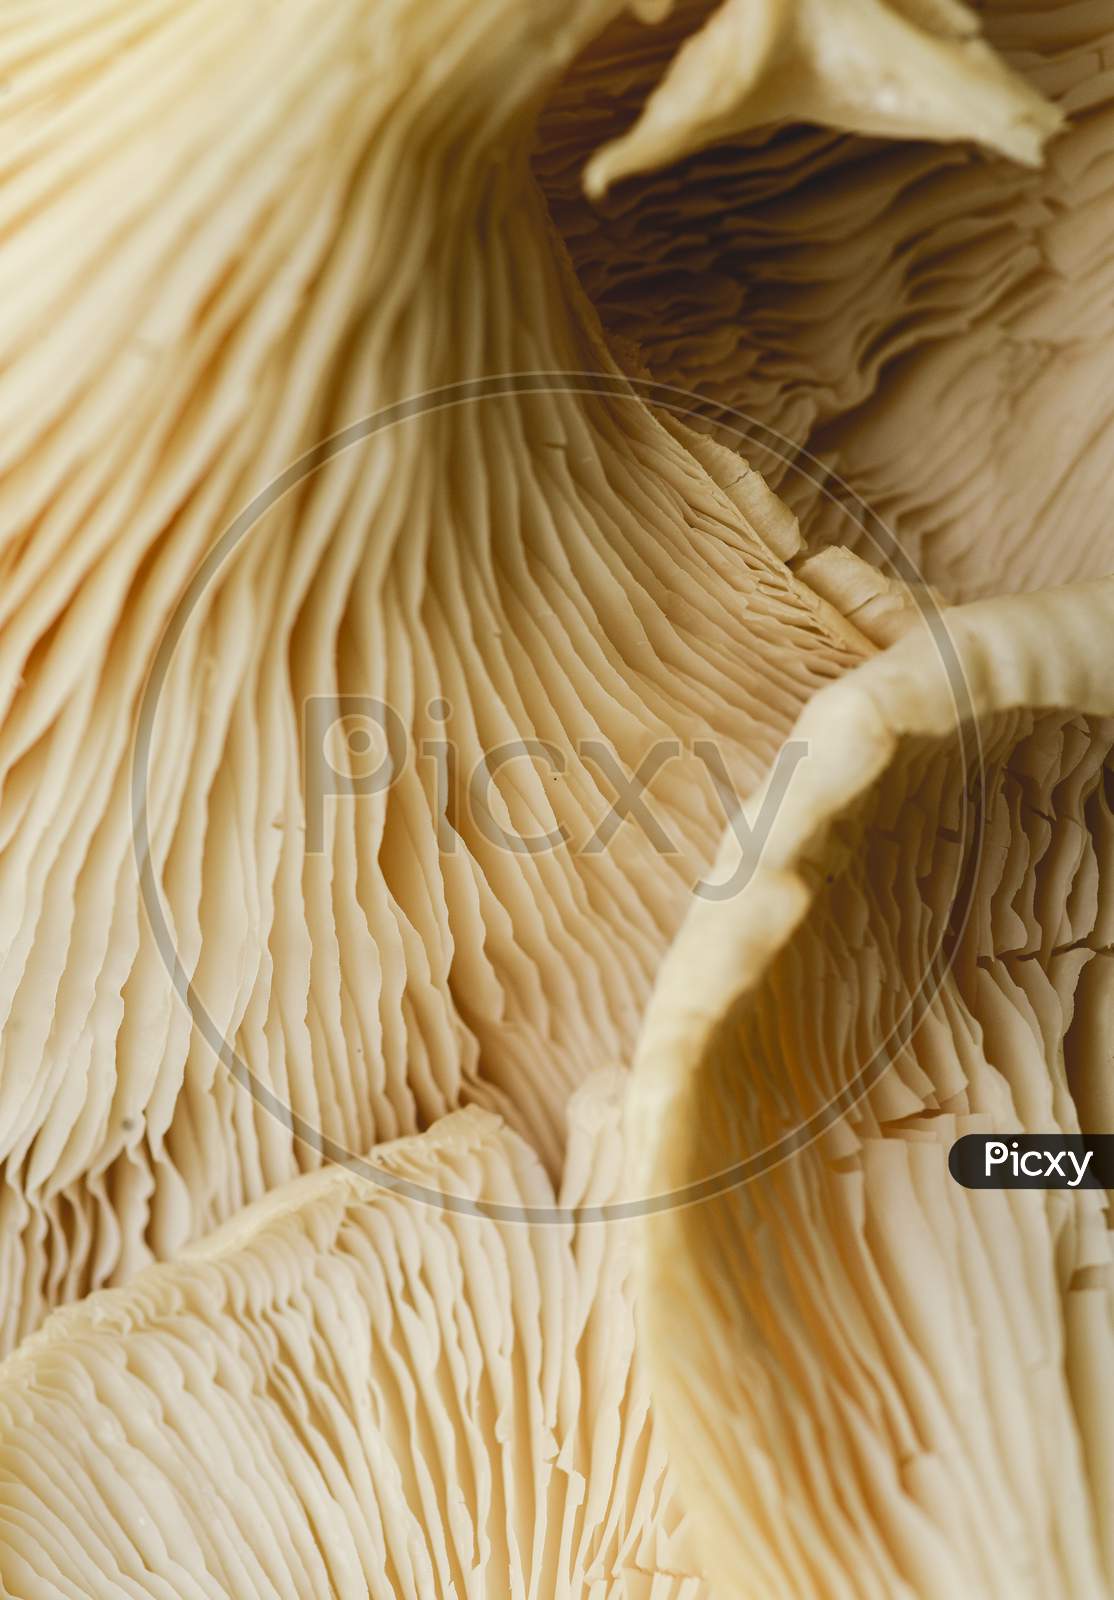 Extreme Macro Close Up Of Edible Mushrooms Details Texture